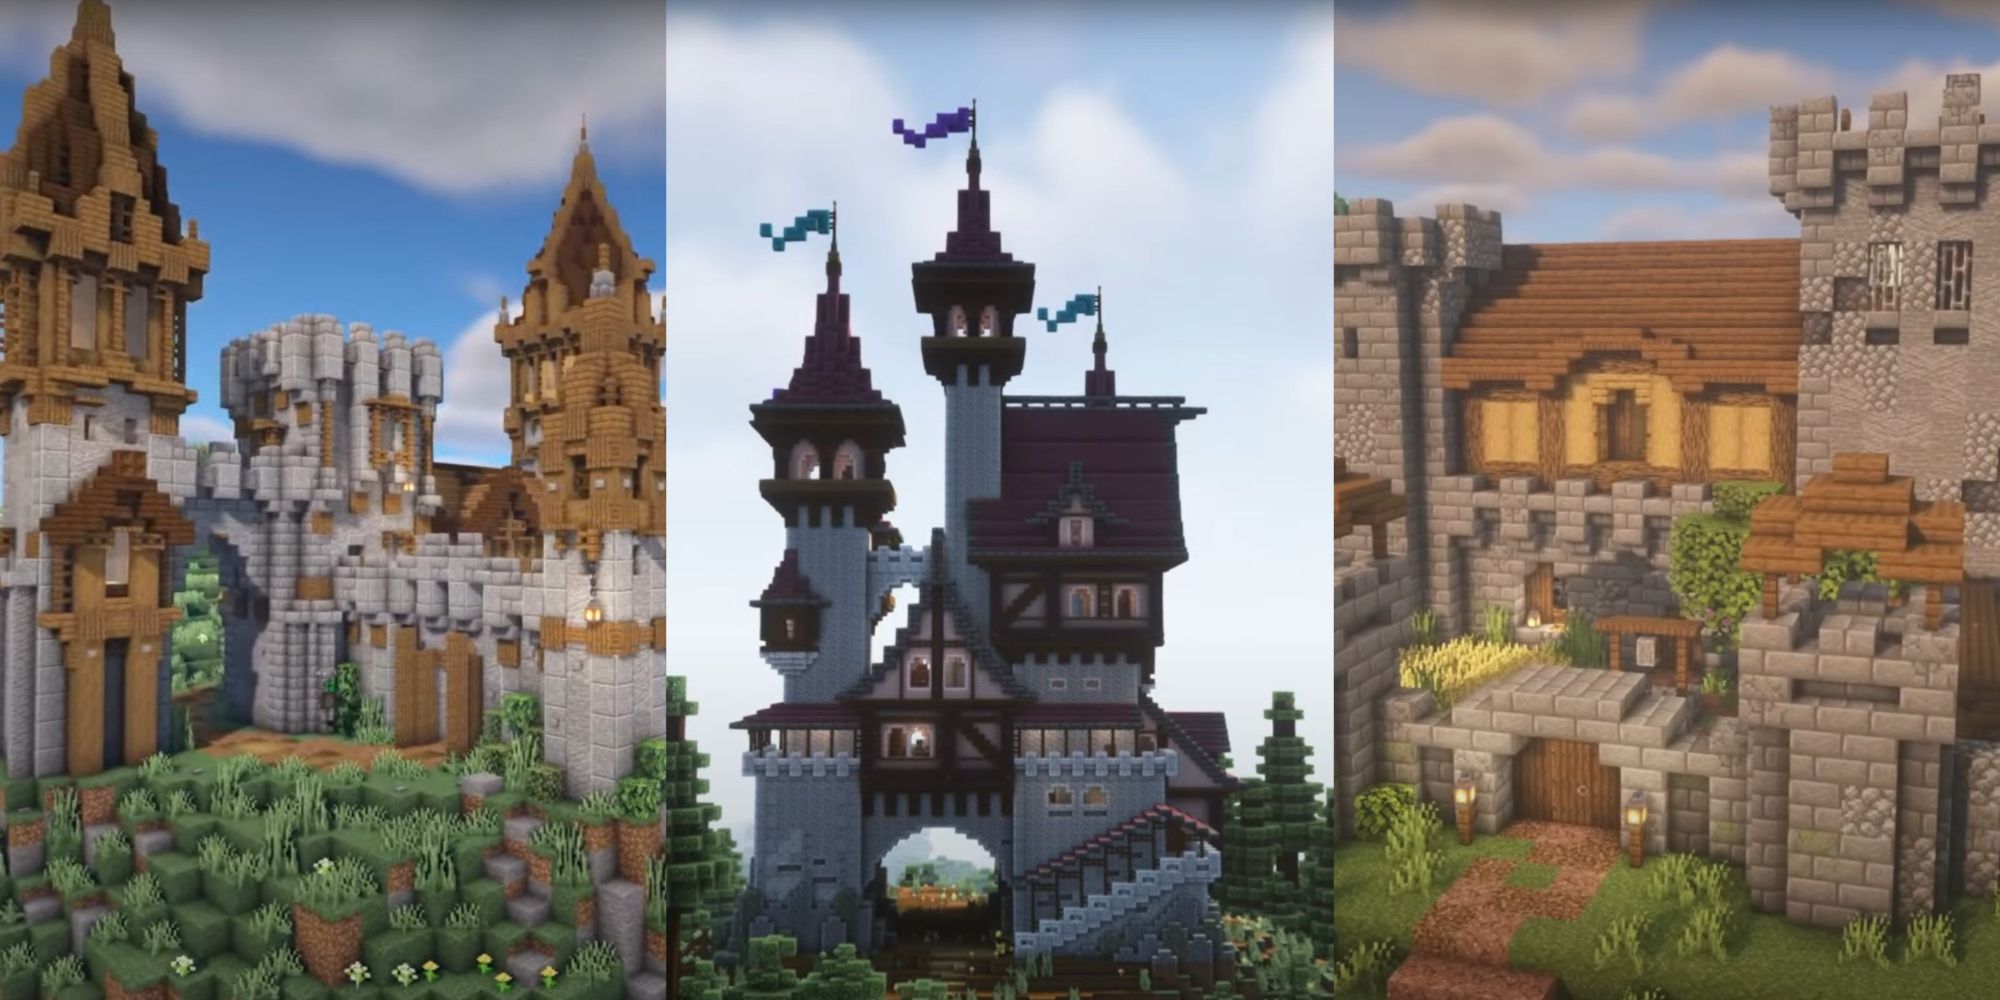 Best Minecraft Castle Ideas: 45 Castle Designs to Build in 2022